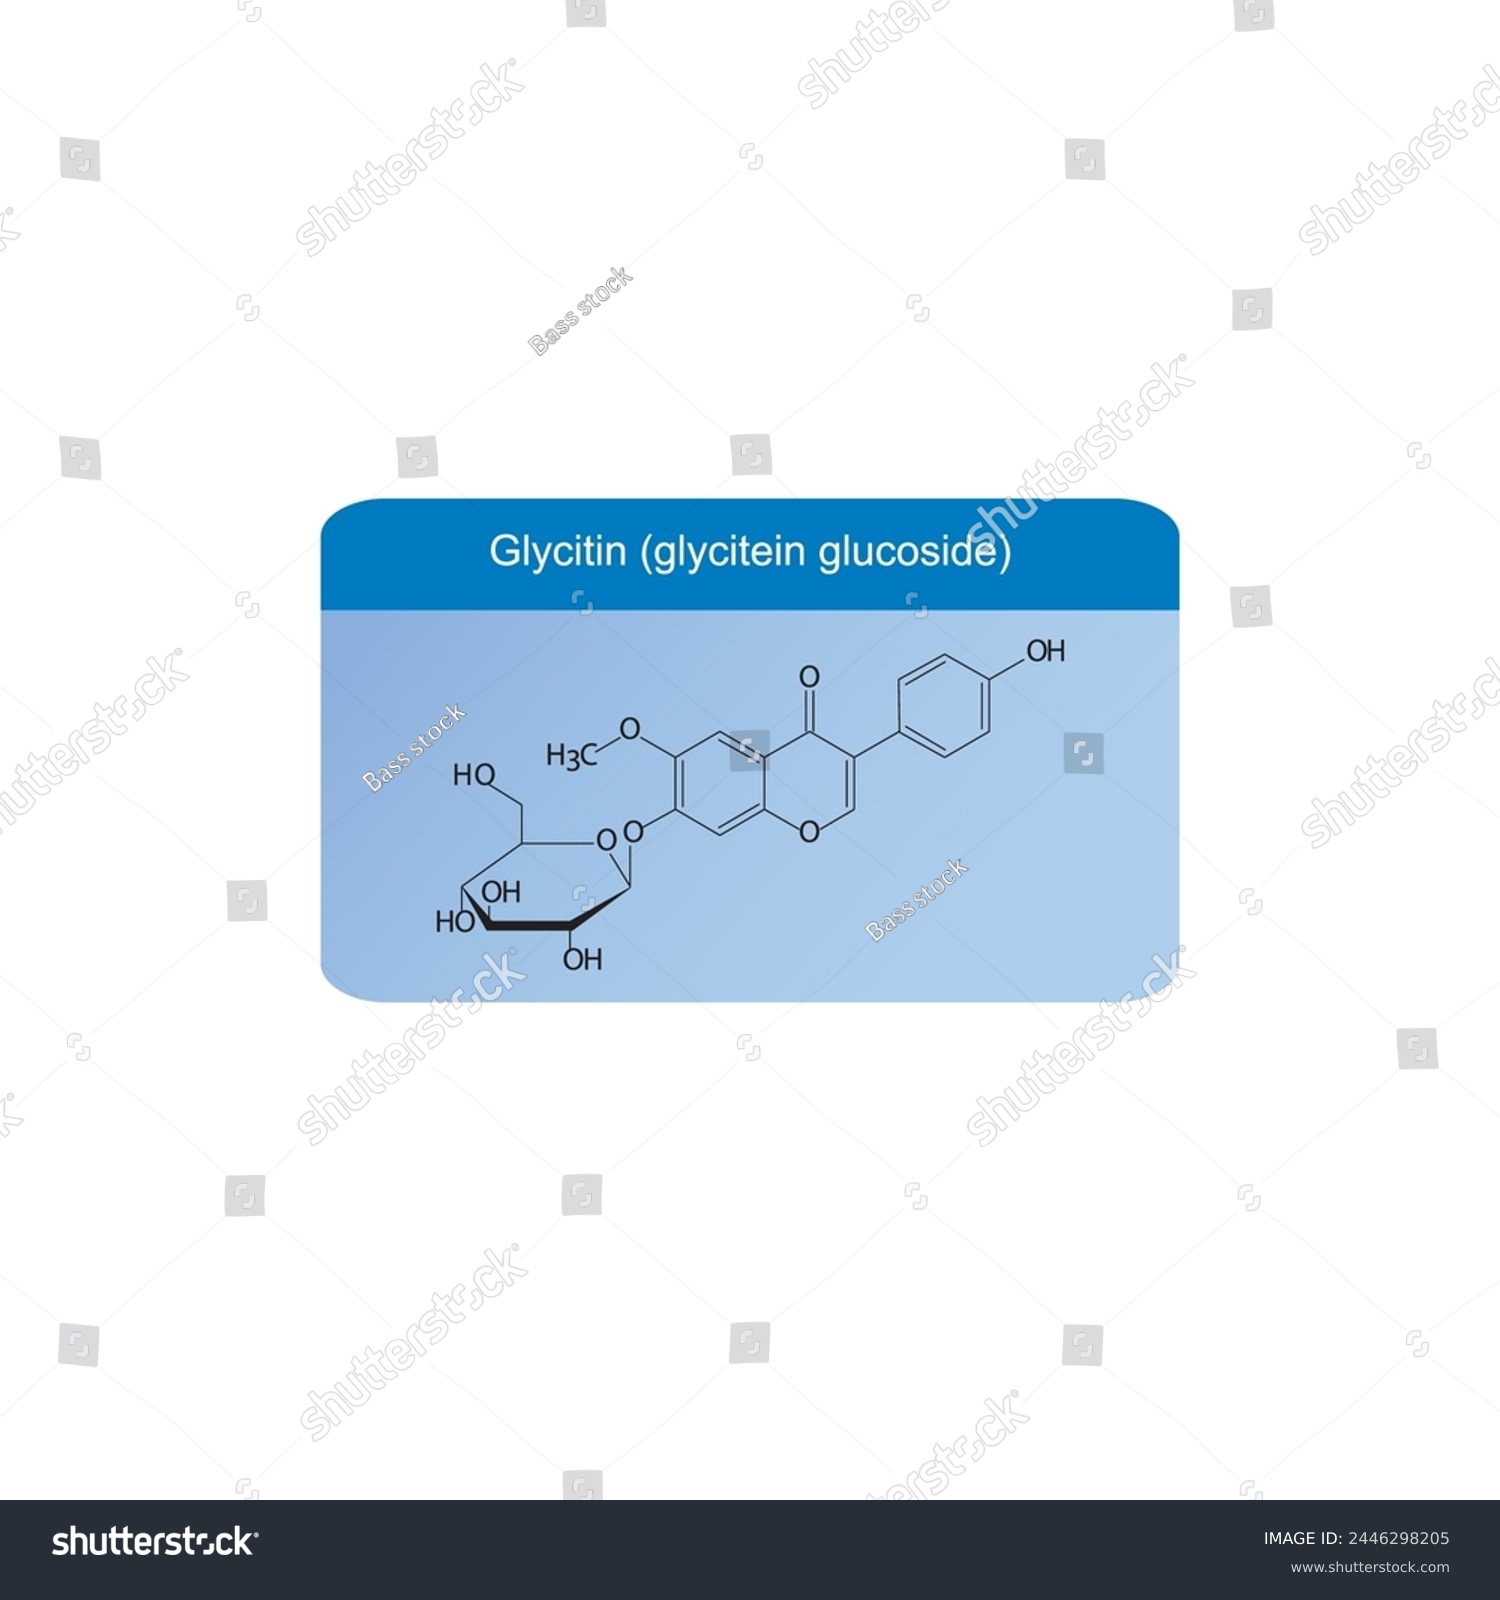 SVG of Glycitin (glycitein glucoside) skeletal structure diagram.Isoflavanone compound molecule scientific illustration on blue background. svg